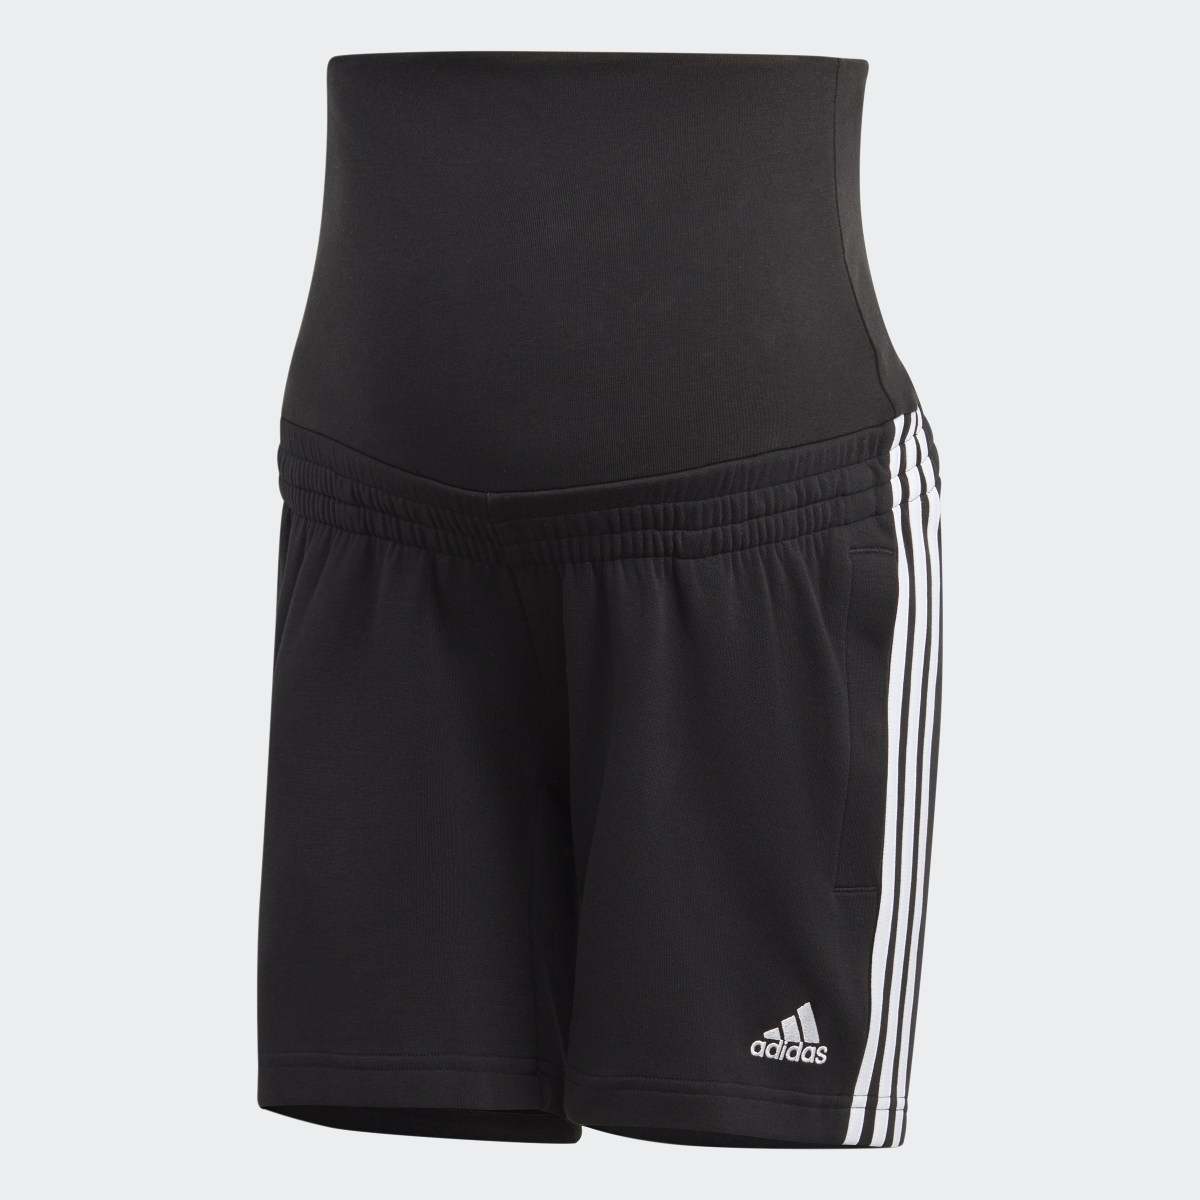 Adidas Maternity Shorts. 4